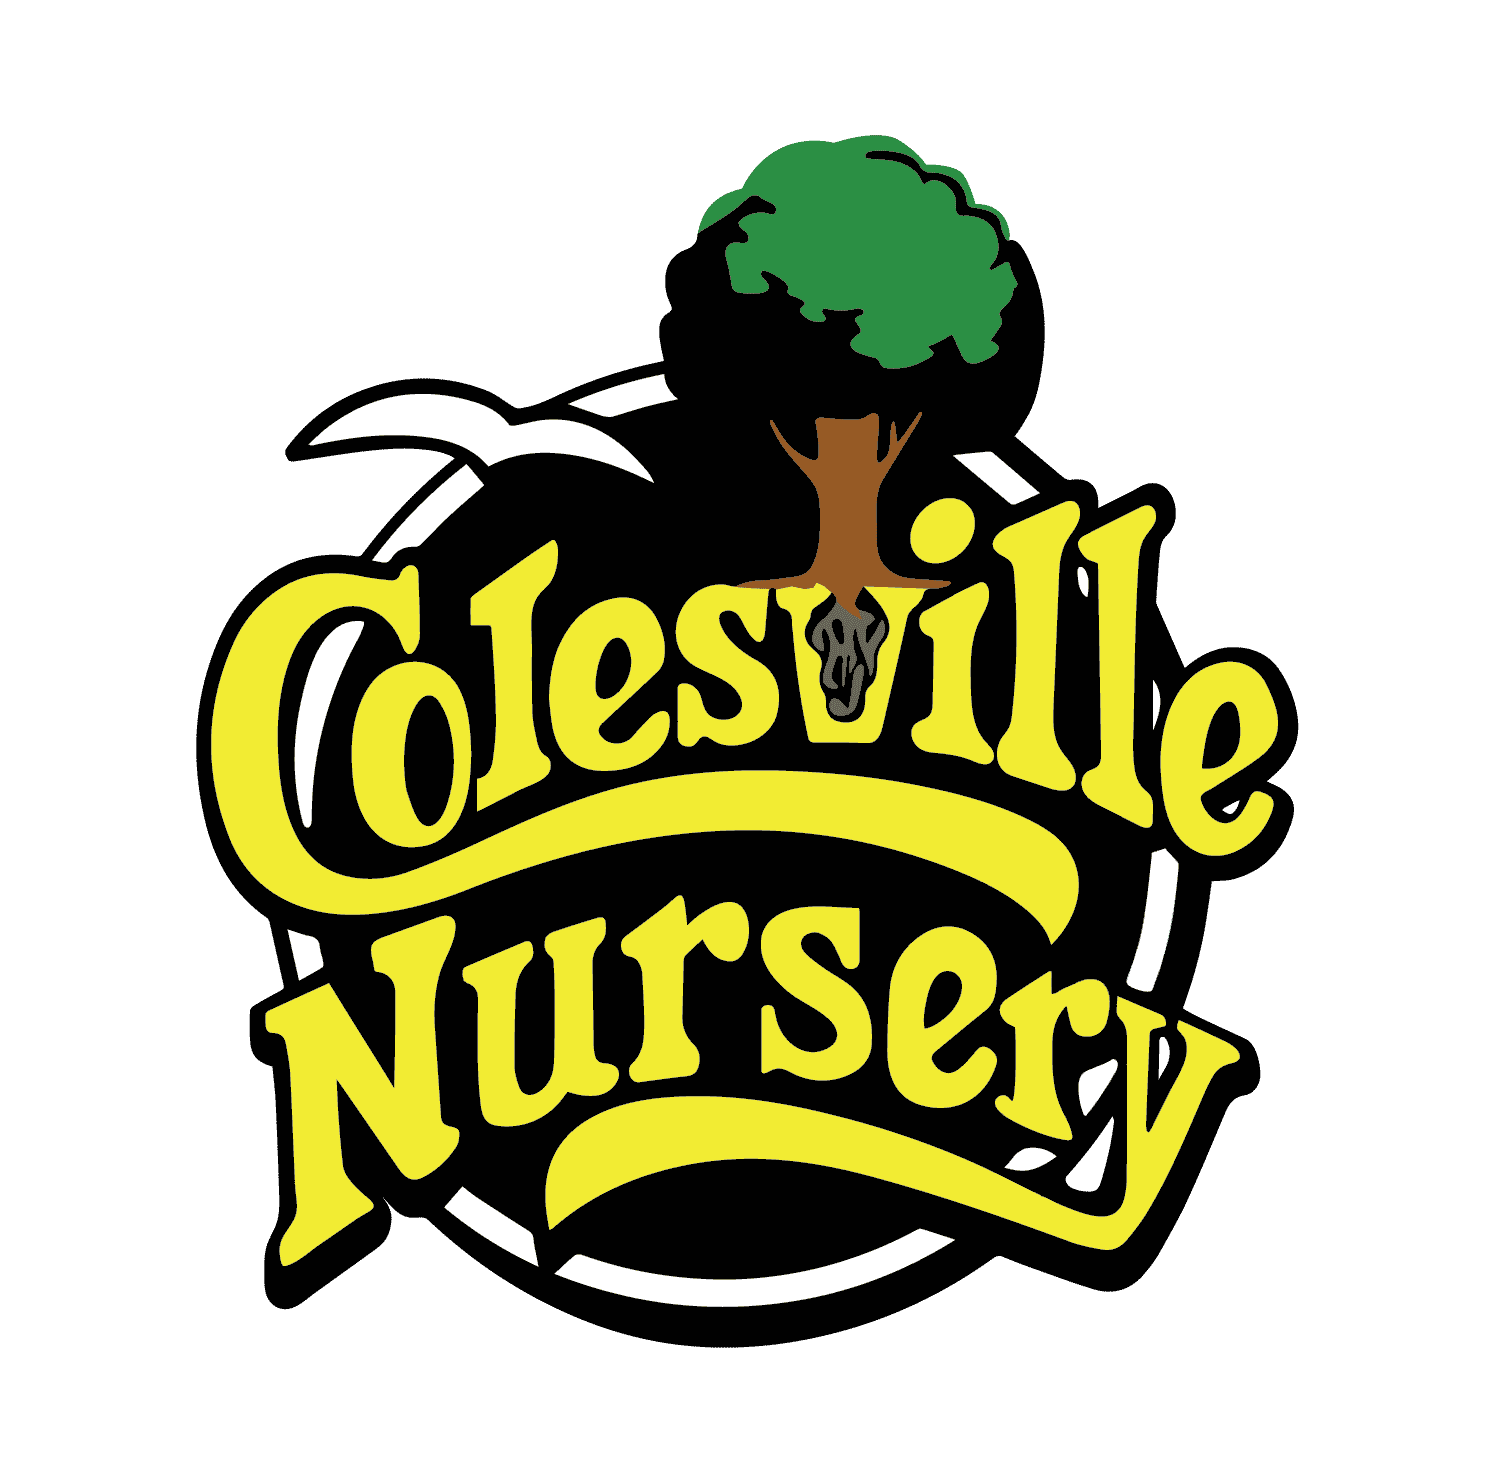 Colesville Nursery RGB